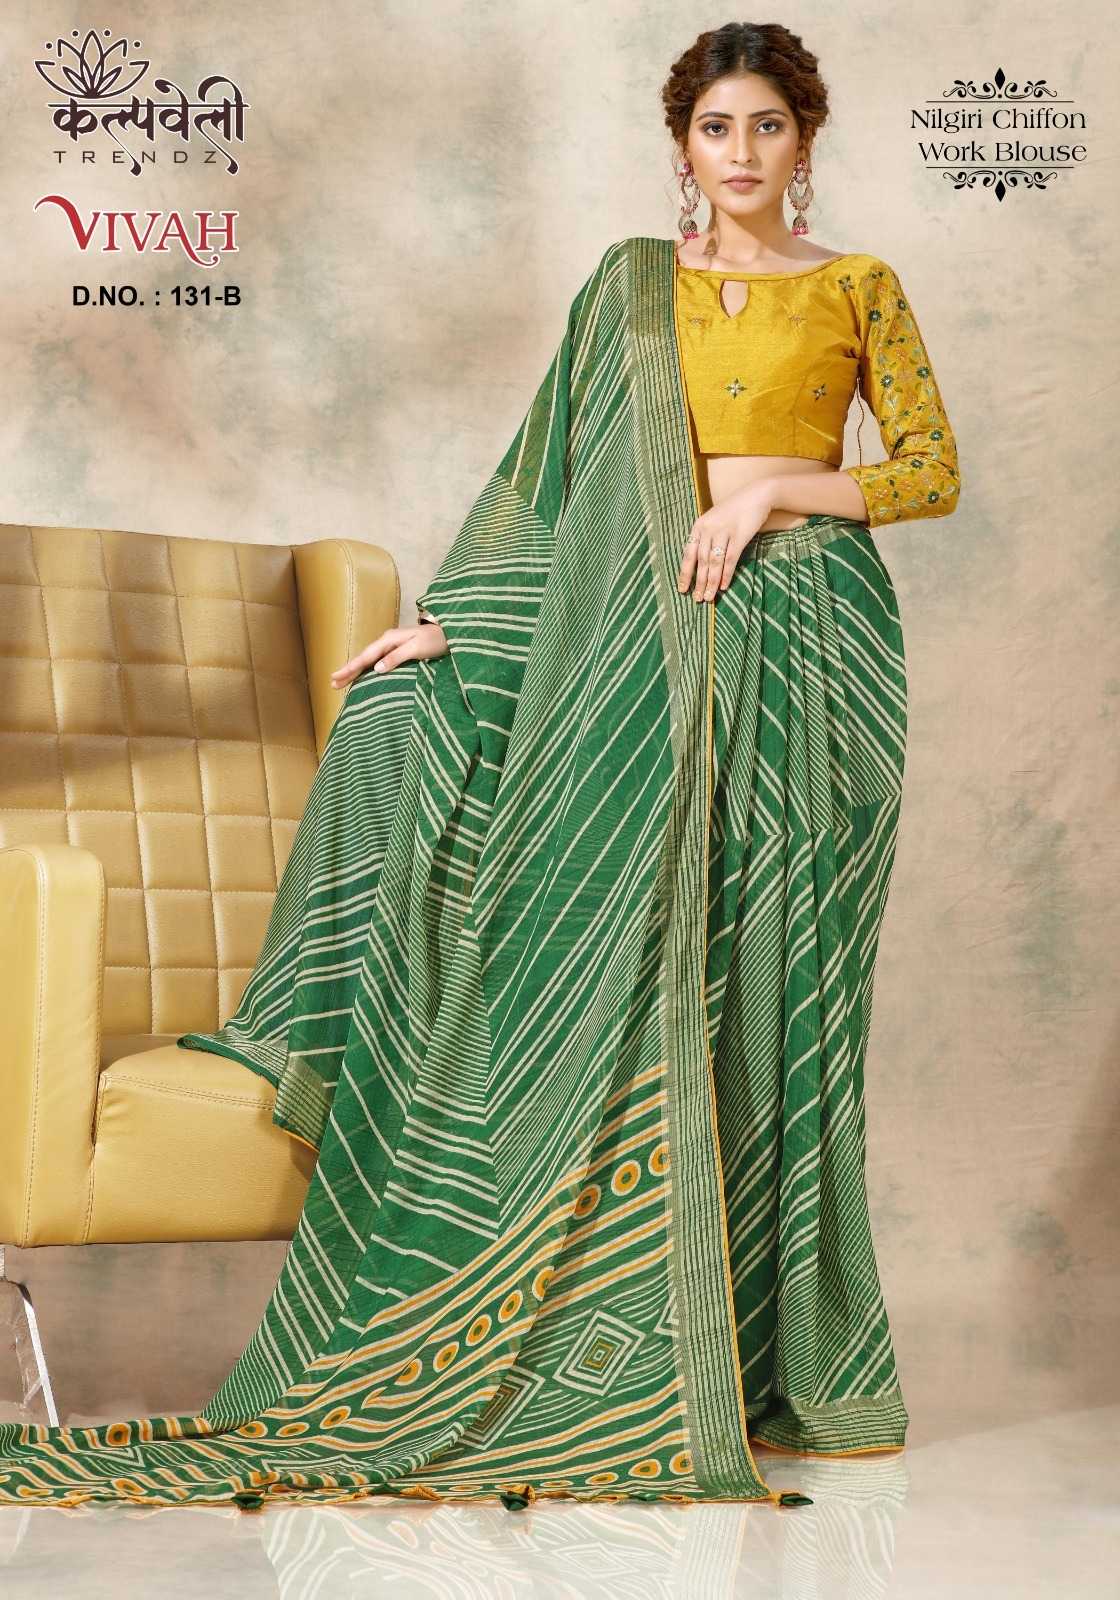 kalpavelly trendz vivah 131 fancy chiffon sarees latest collection